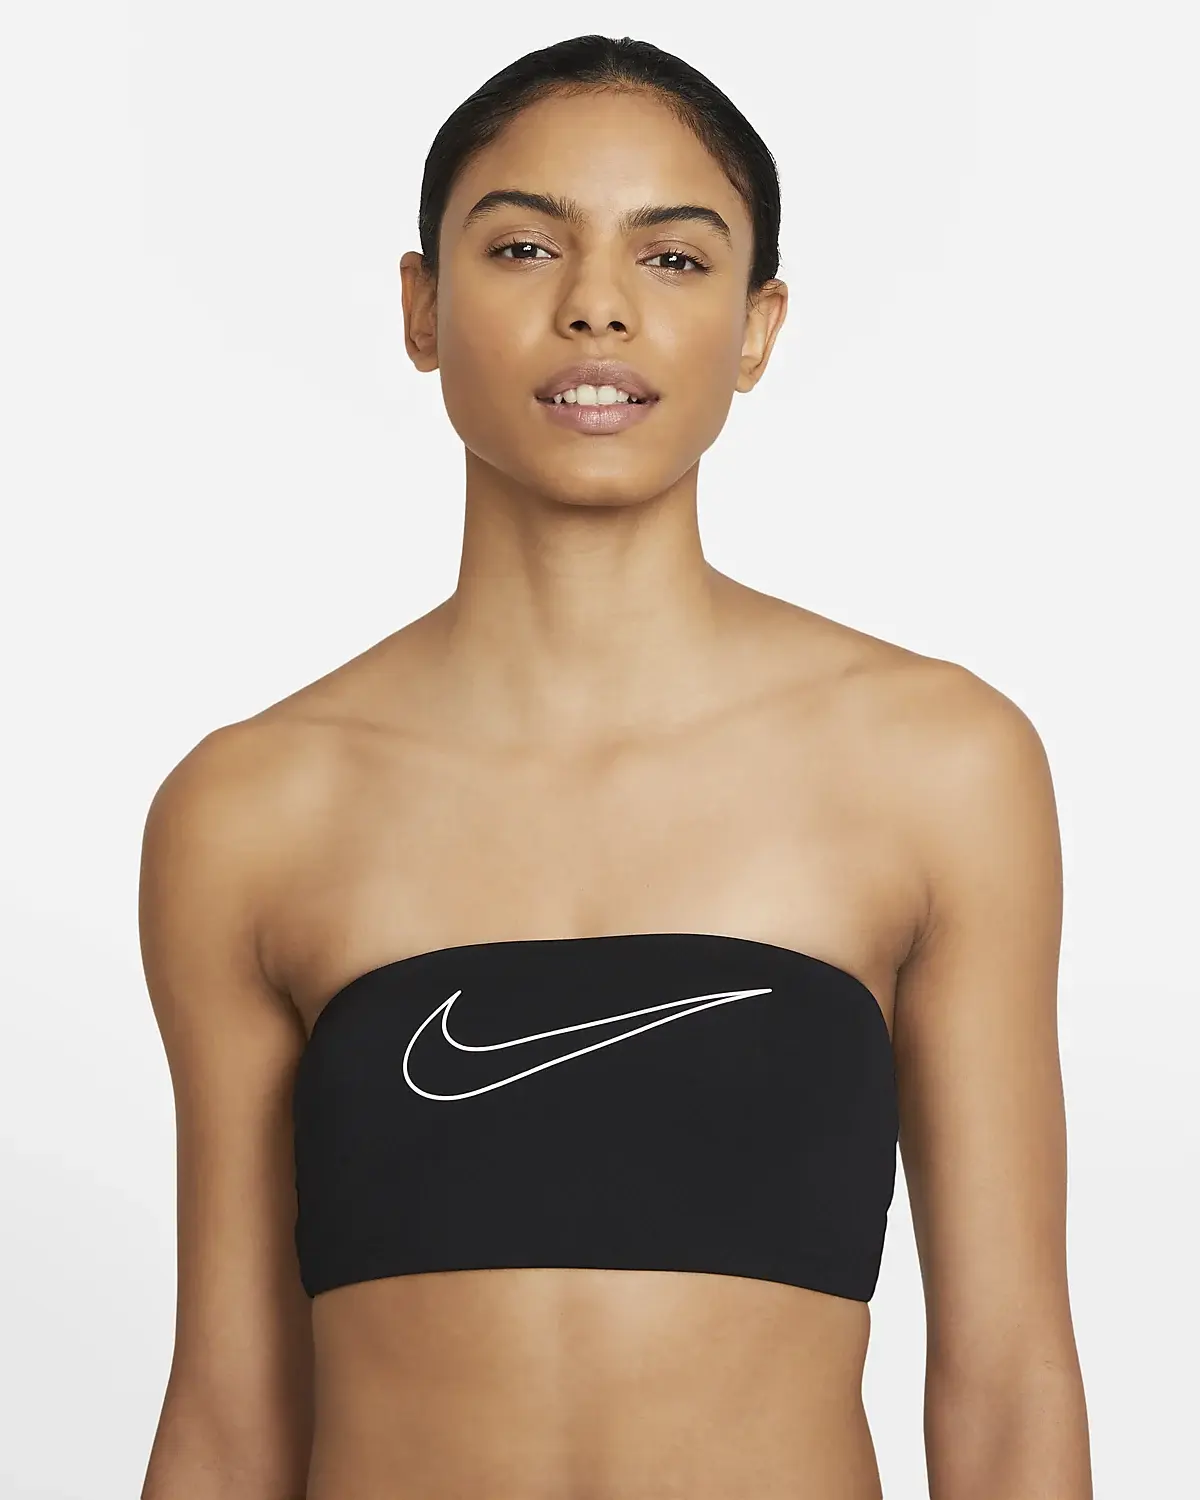 Nike Bikinis. 1